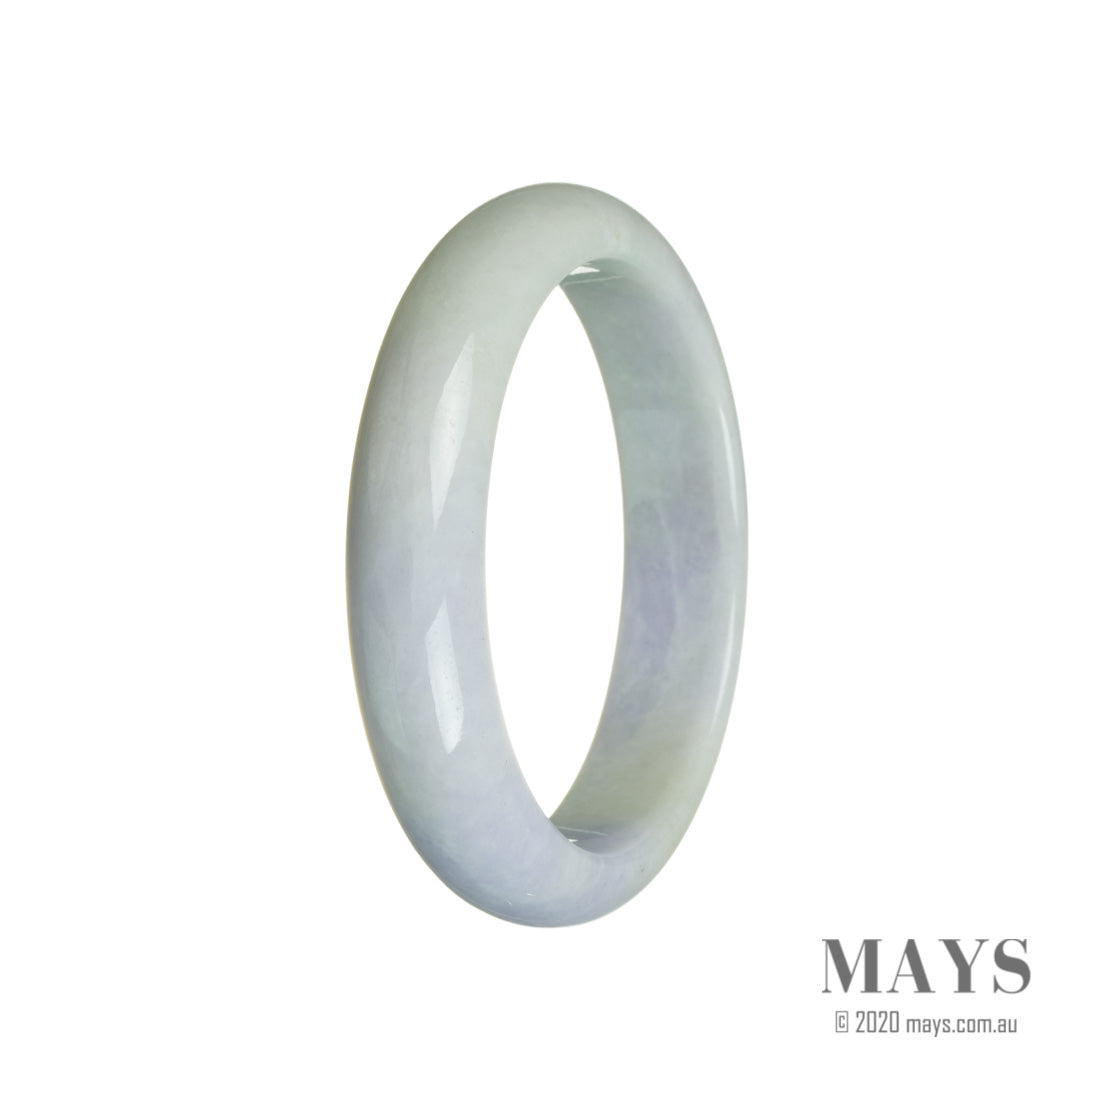 A lavender and green Burma Jade bangle bracelet with a half moon shape, certified Grade A.